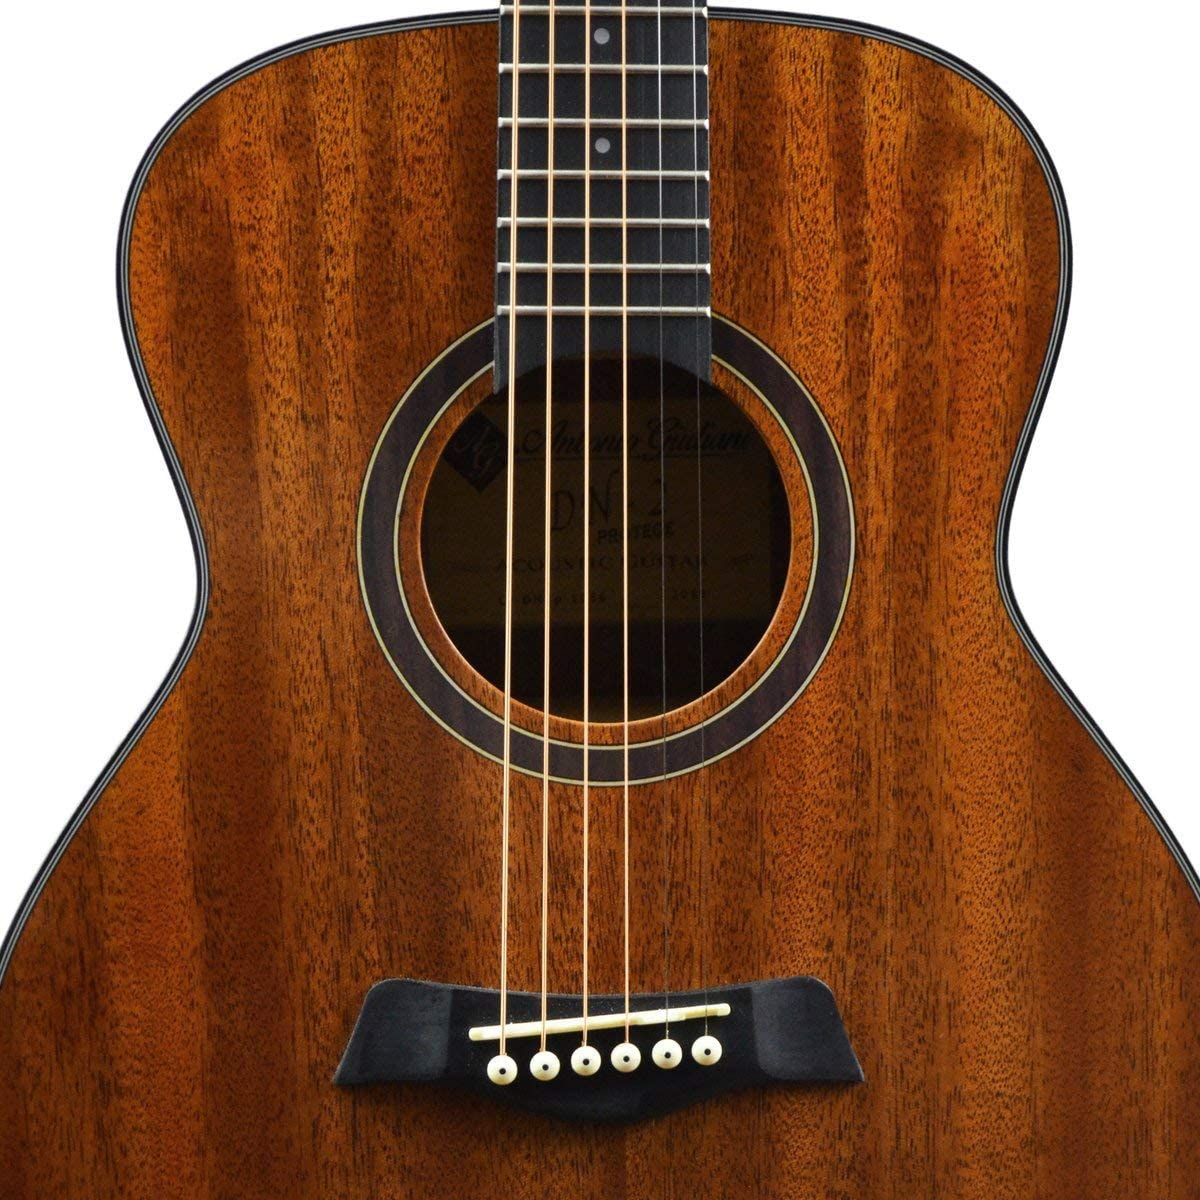 Antonio Giuliani Acoustic Mahogany Guitar main body front view